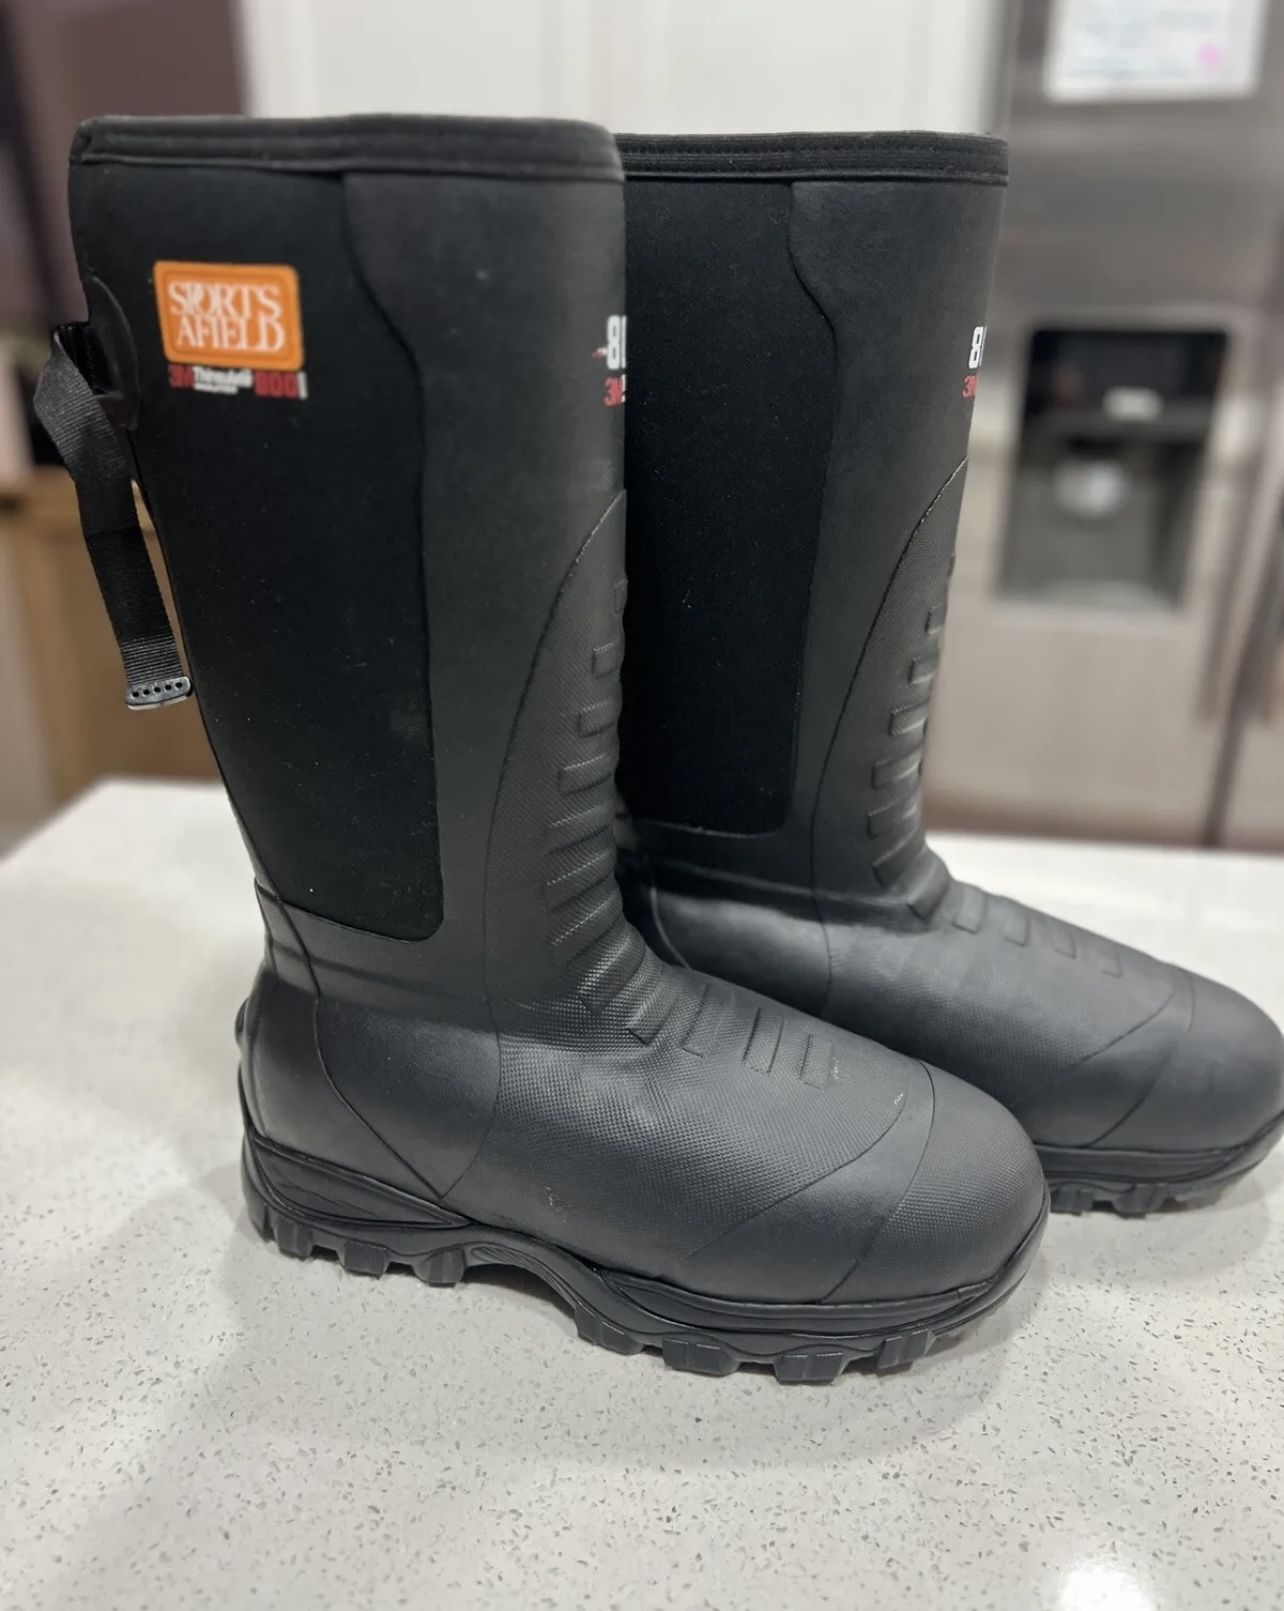 NEW!! Sports Afield Men's Black Pursuit 800 16" Rubber Knee Boots Size 11 New Work Boots Rain Boots 